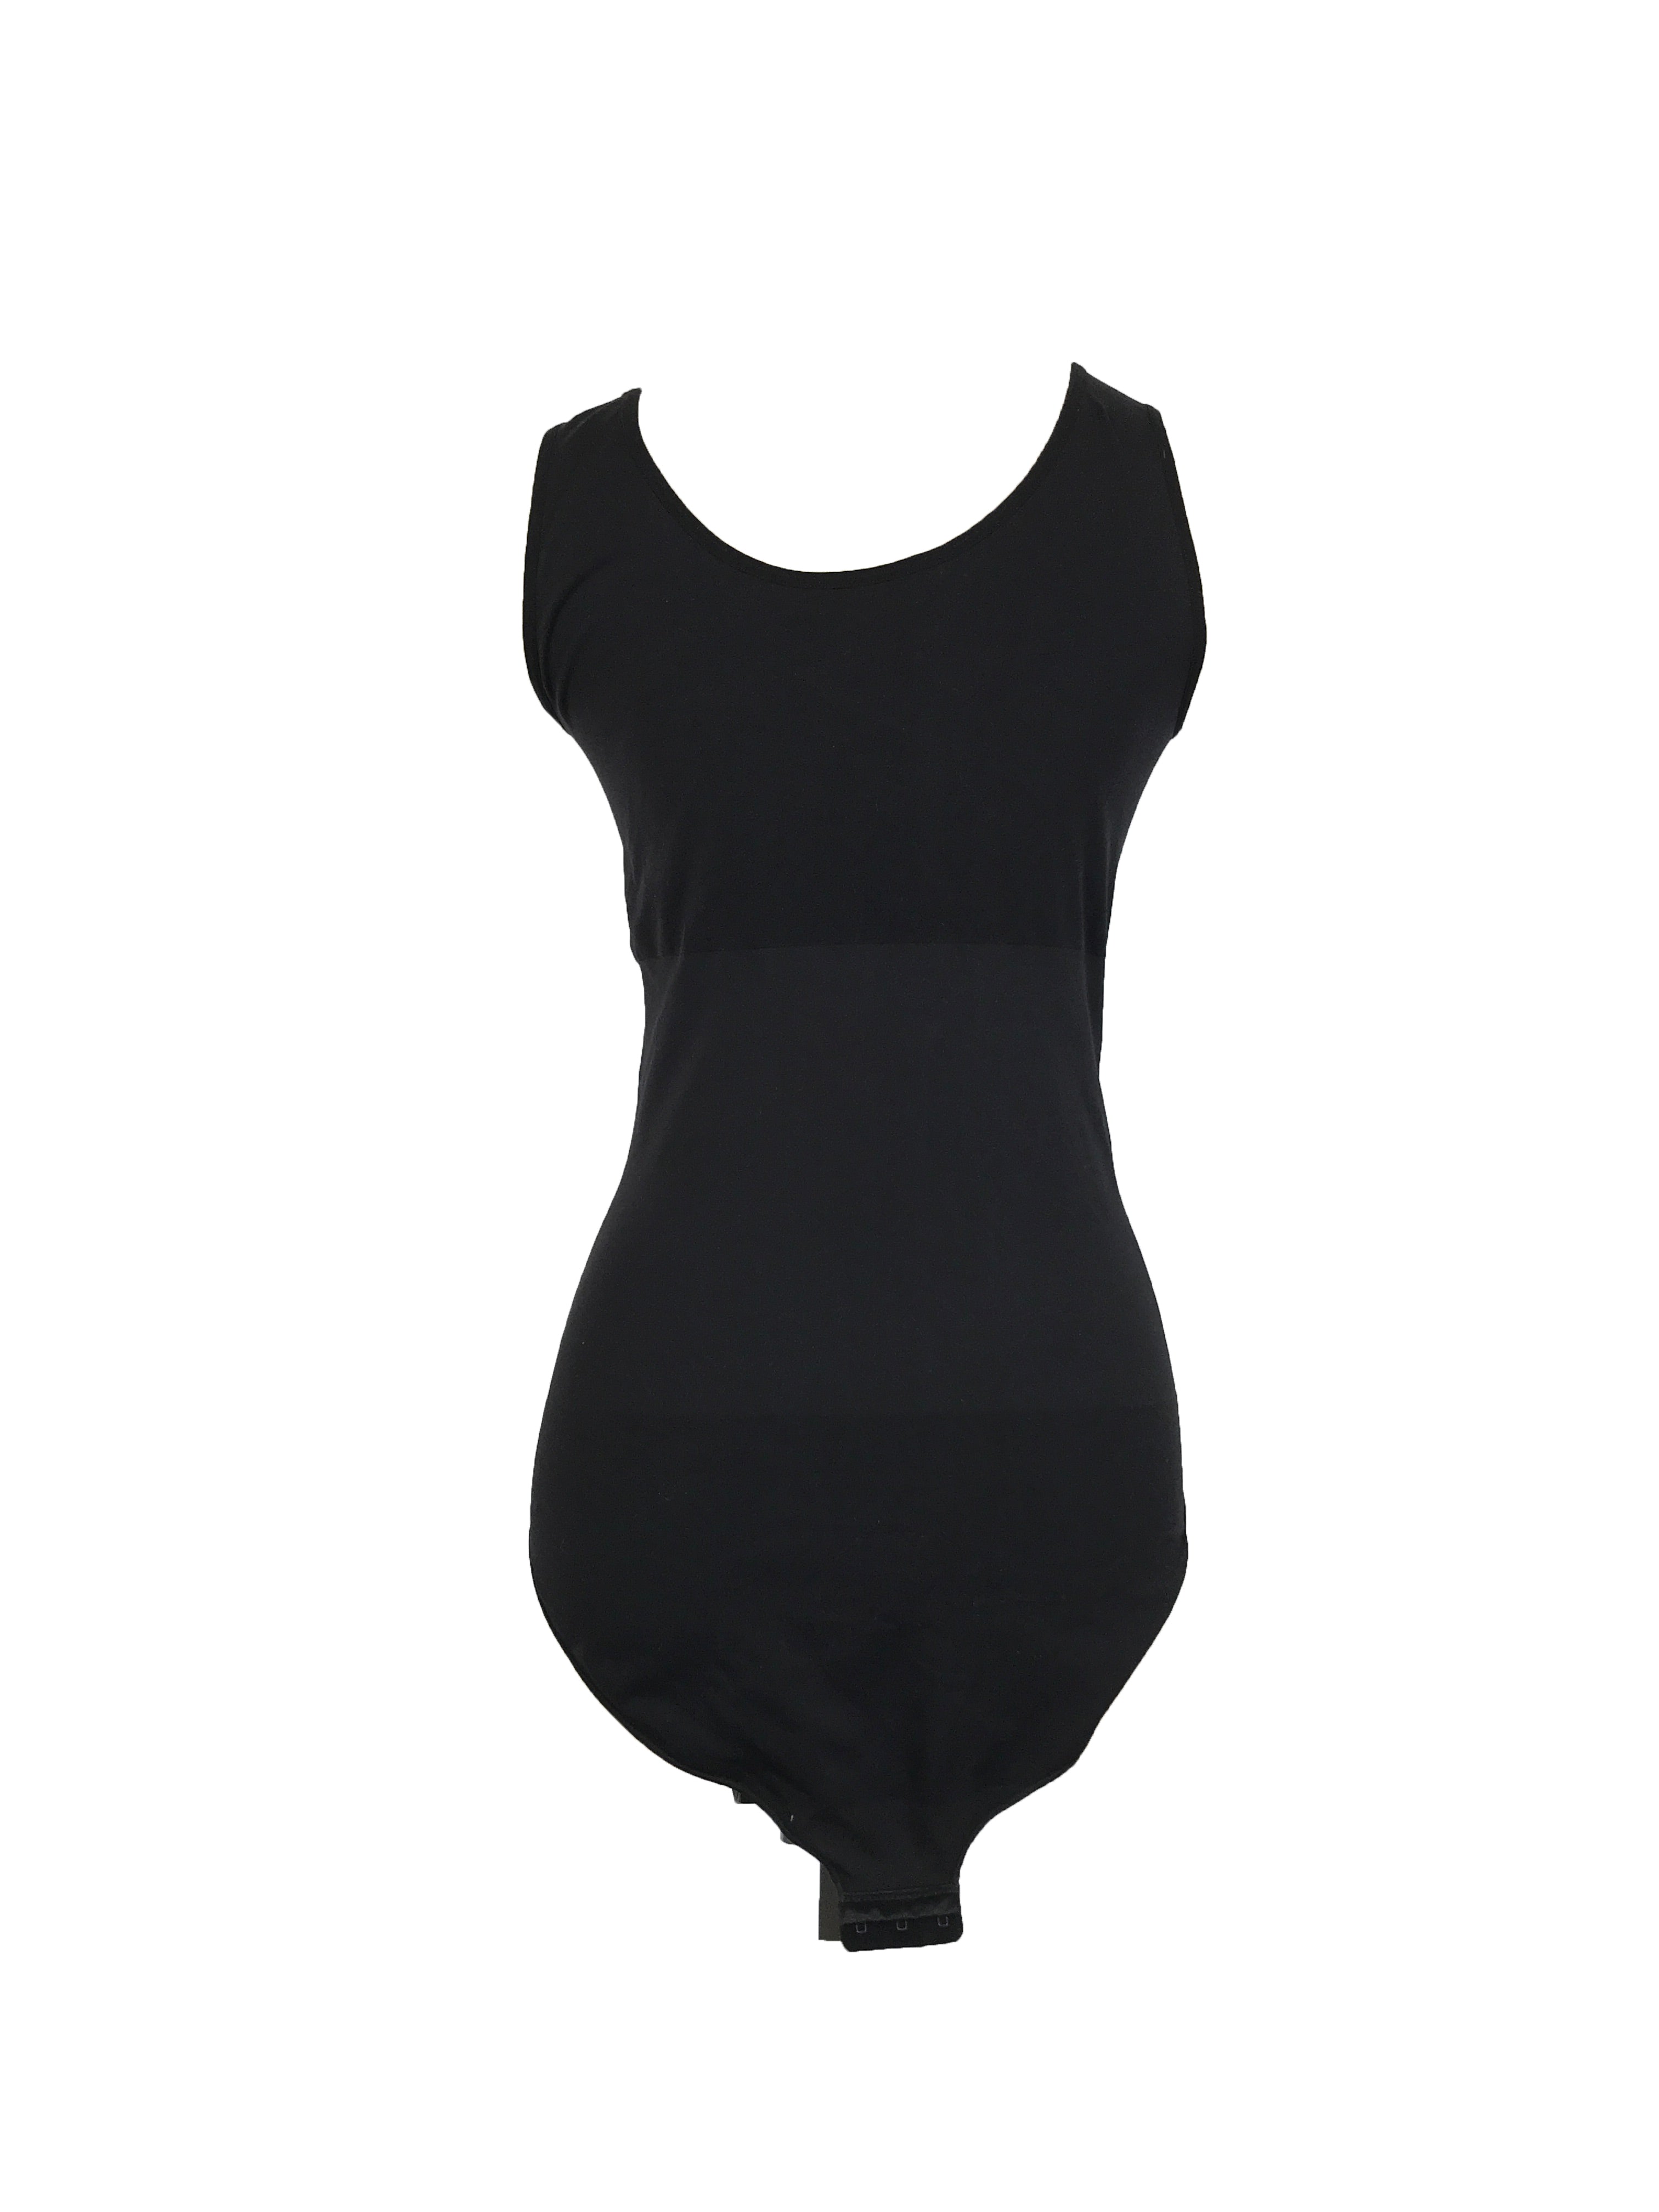 Spanx Black Bodysuit Women's Size XL